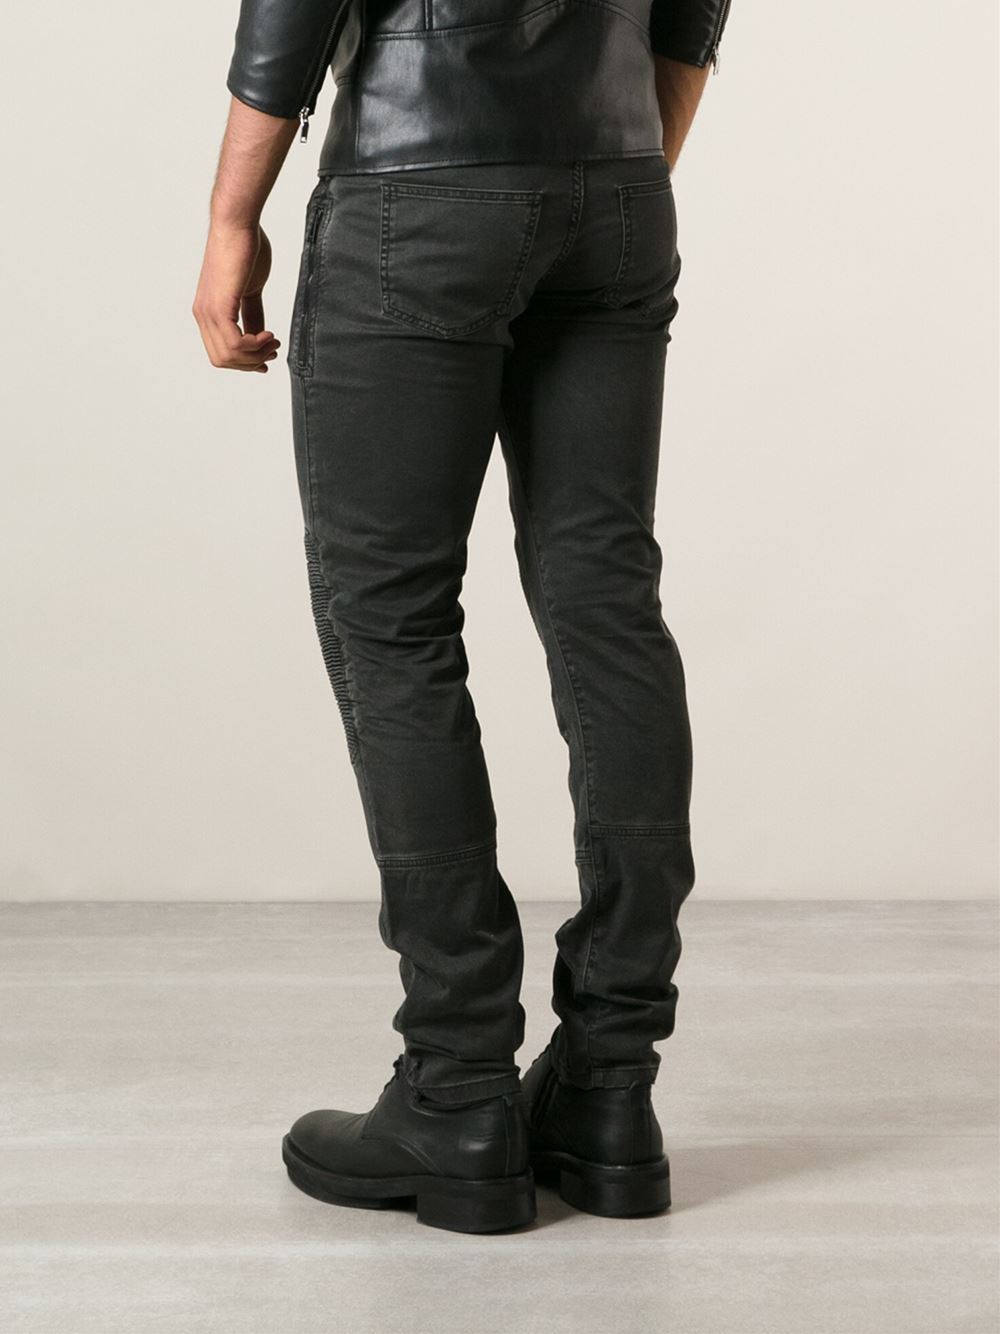 Belstaff Ribbed Knee Slim Jeans in Black for Men - Lyst